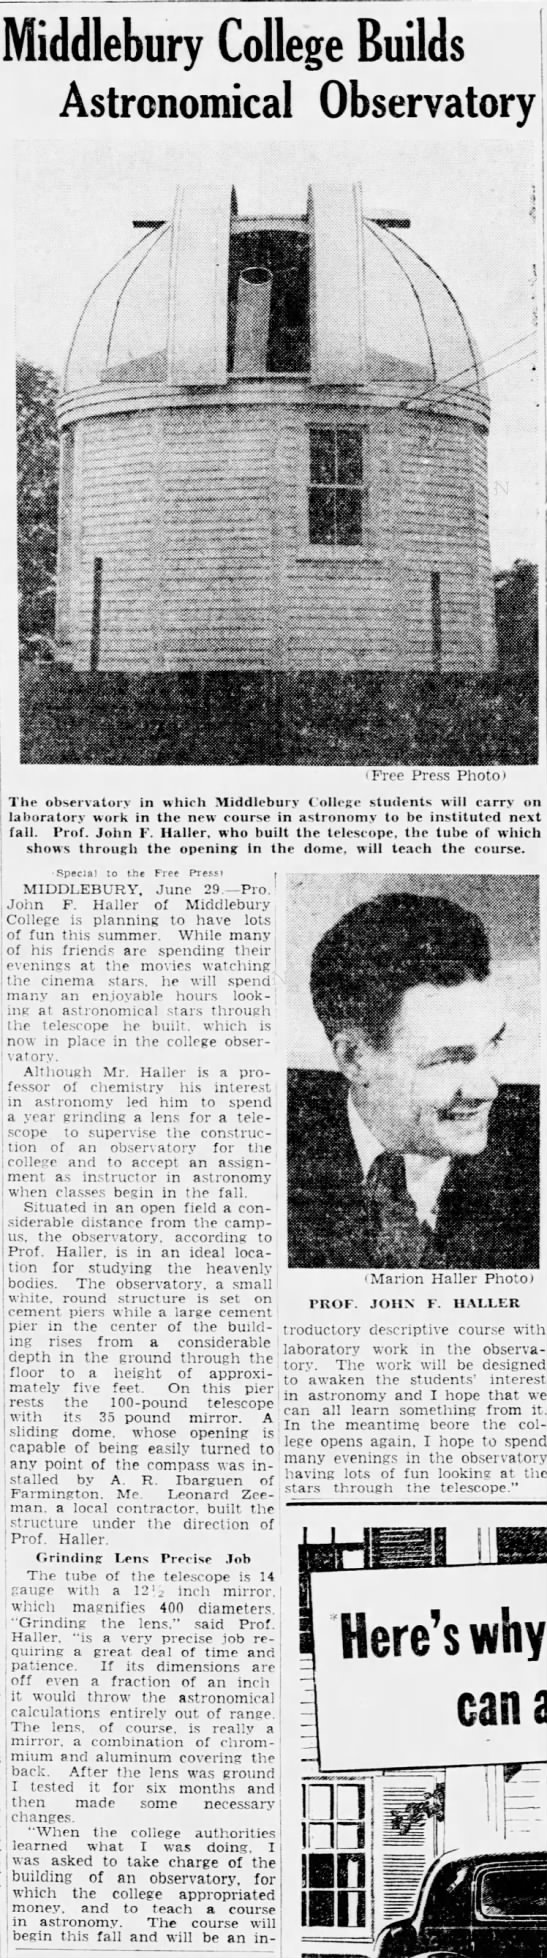 Burlington Free Press and Times, 1937 June 30, page 2 - 